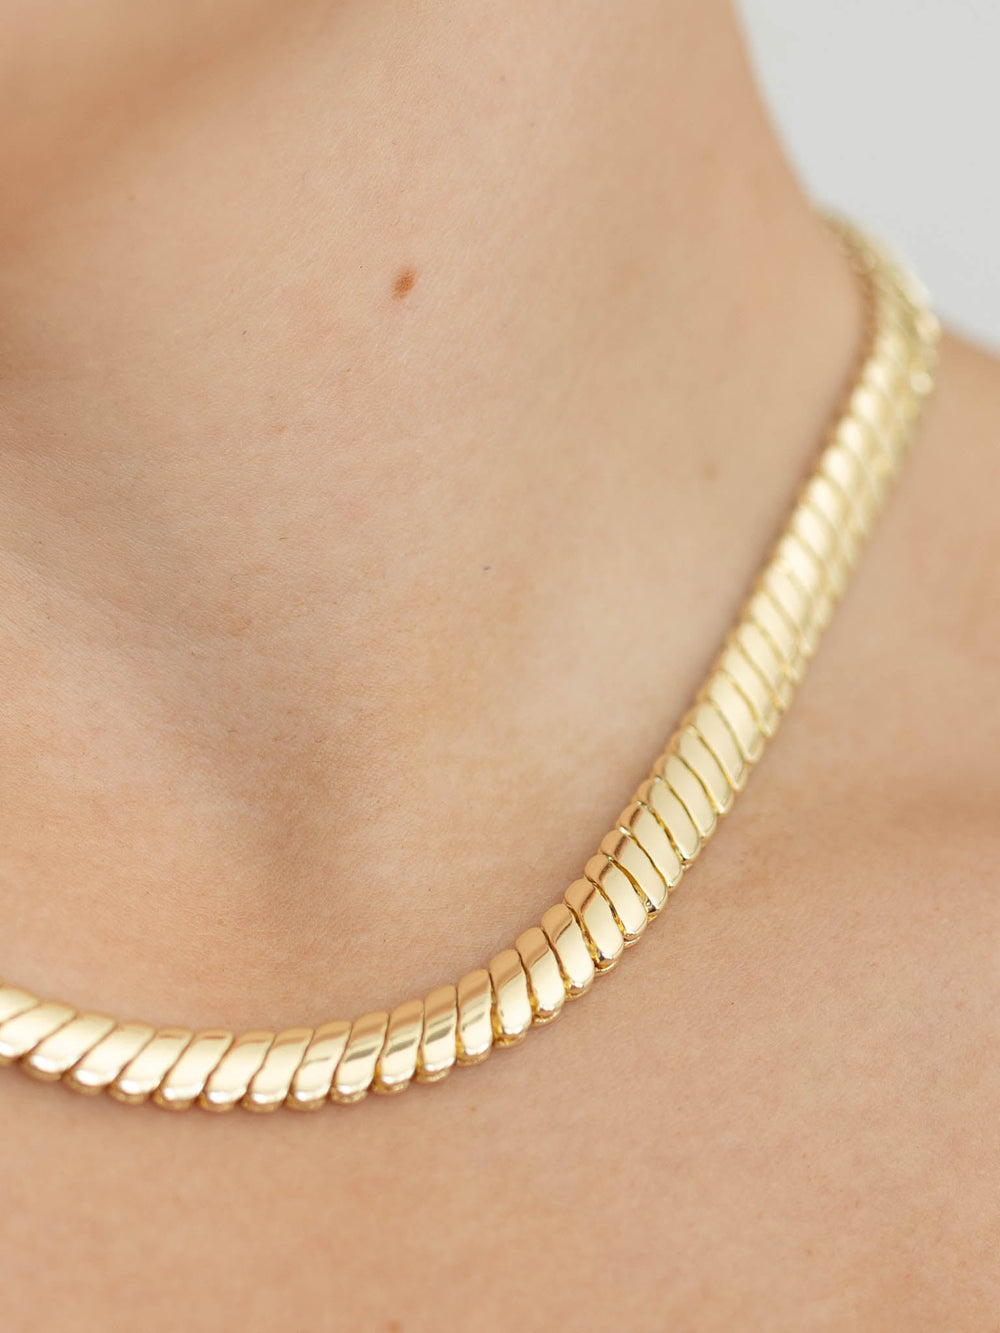 Kendra Scott Lex Chain NecklacePremium necklace